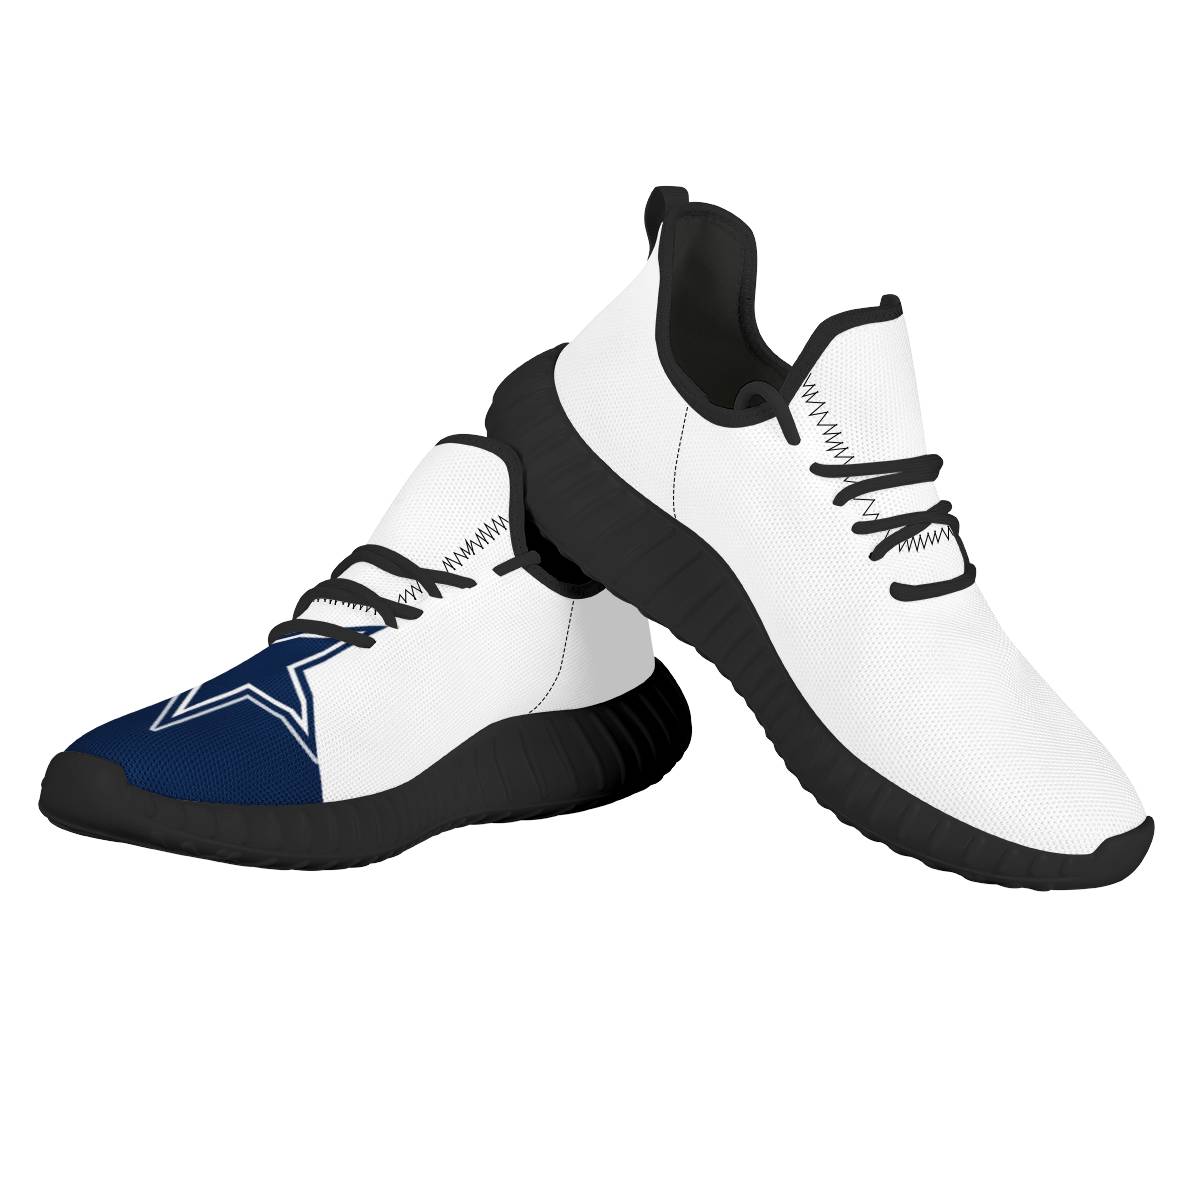 Men's NFL Dallas Cowboys Lightweight Running Shoes 004